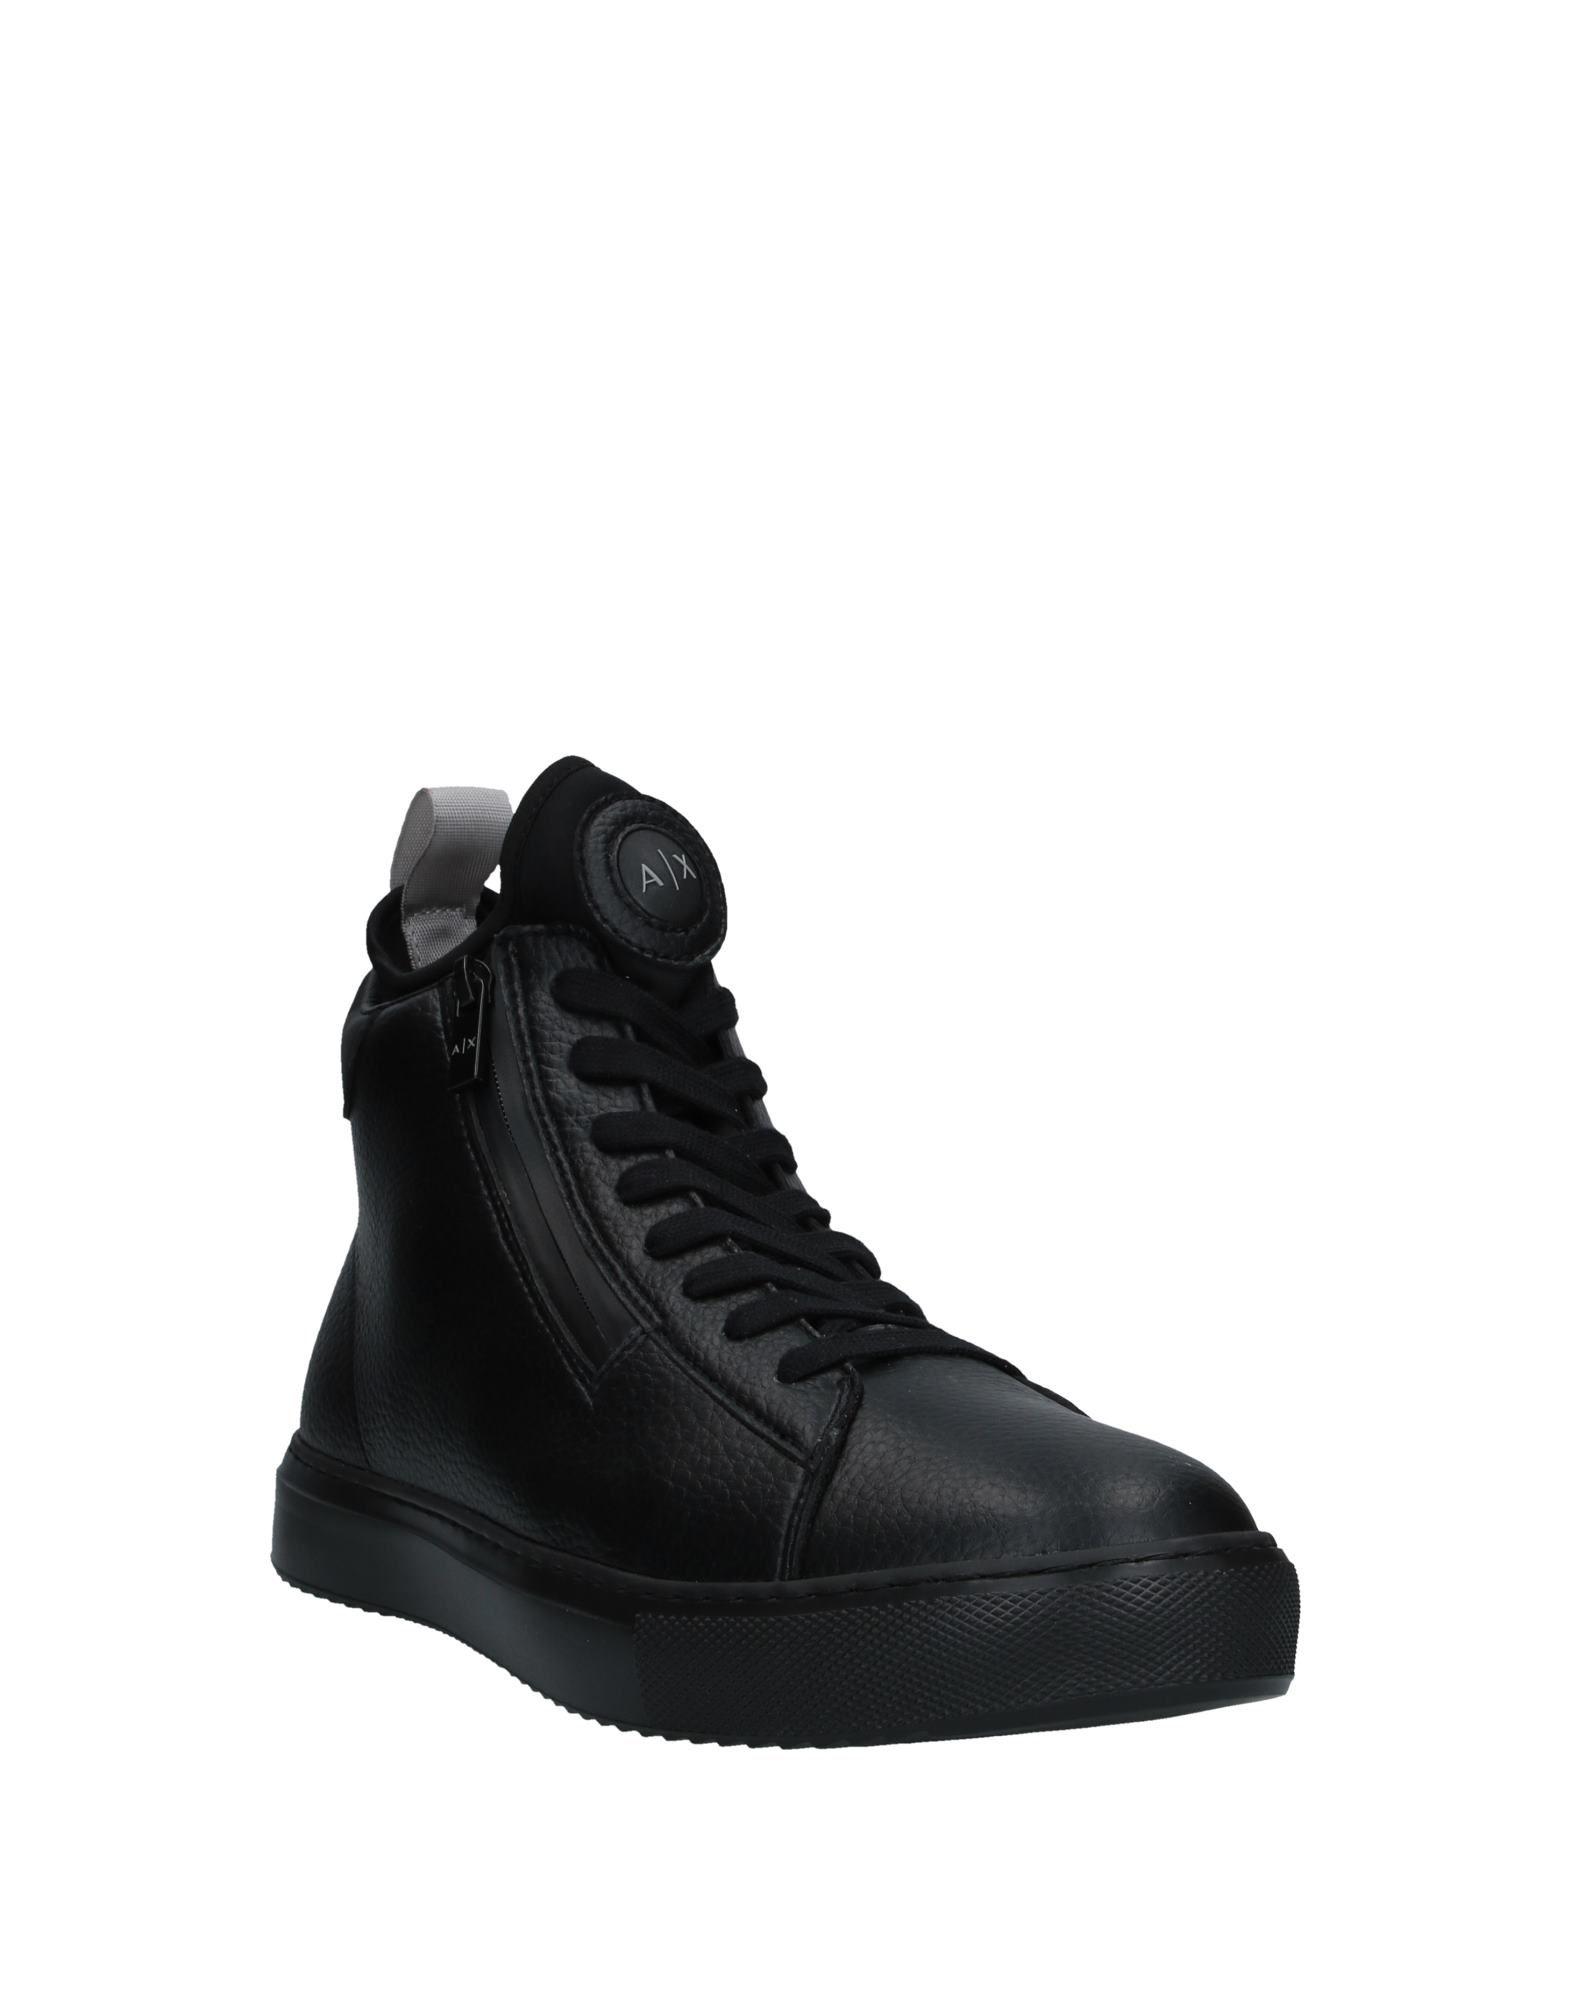 Armani Exchange High-tops & Sneakers in Black for Men - Lyst